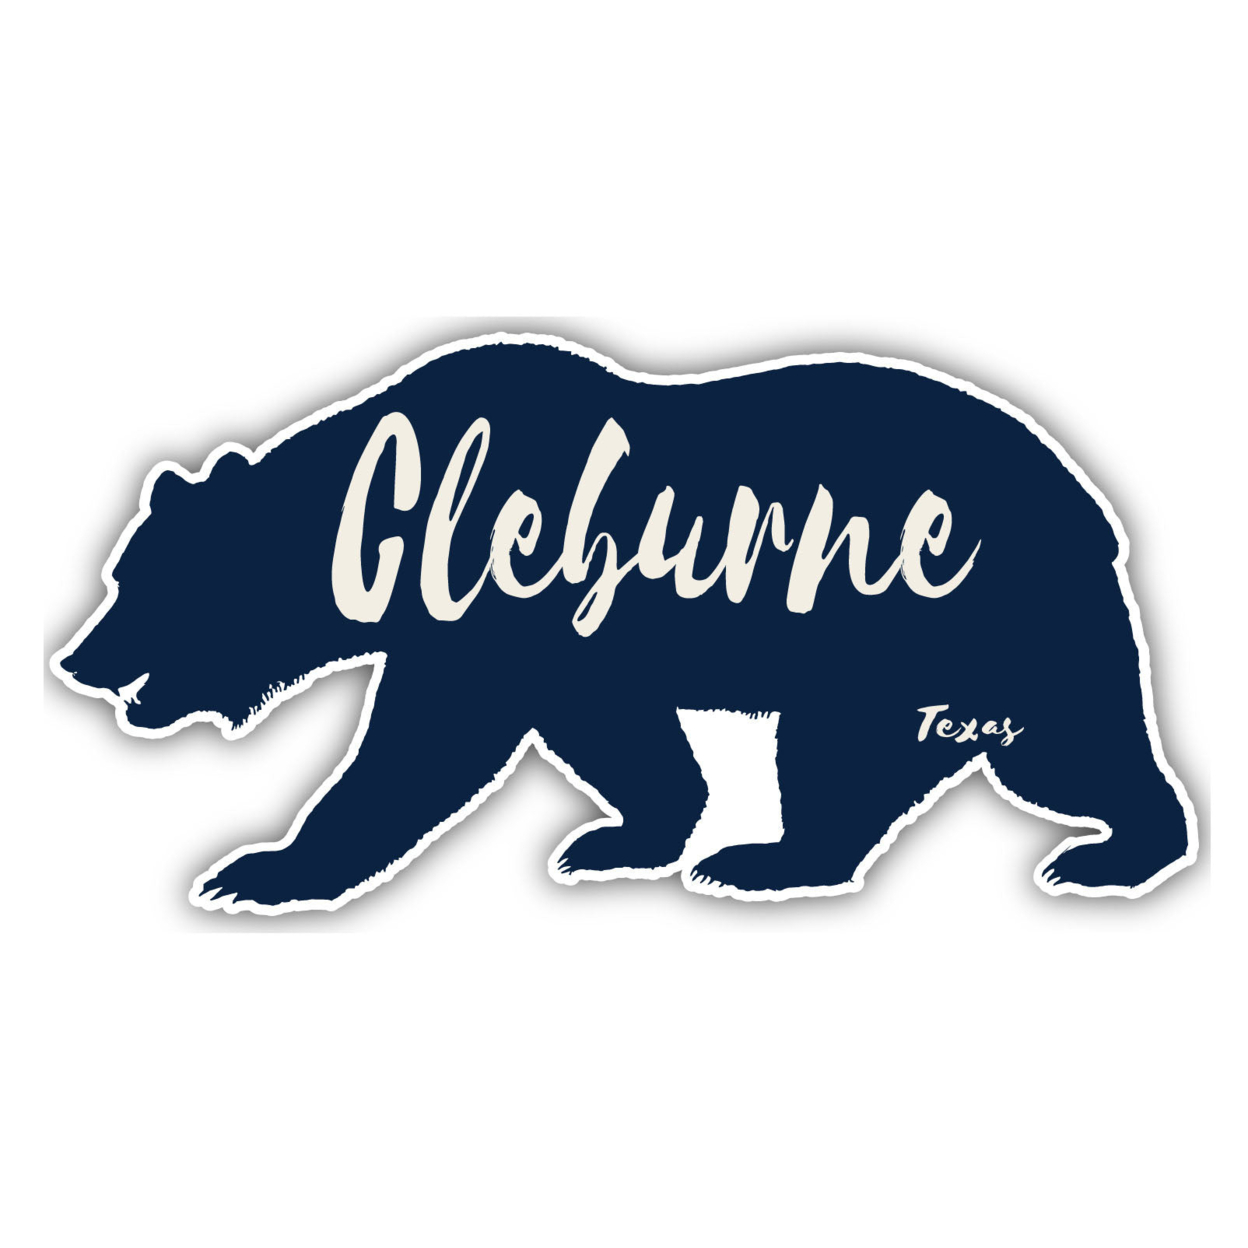 Cleburne Texas Souvenir Decorative Stickers (Choose Theme And Size) - Single Unit, 2-Inch, Bear